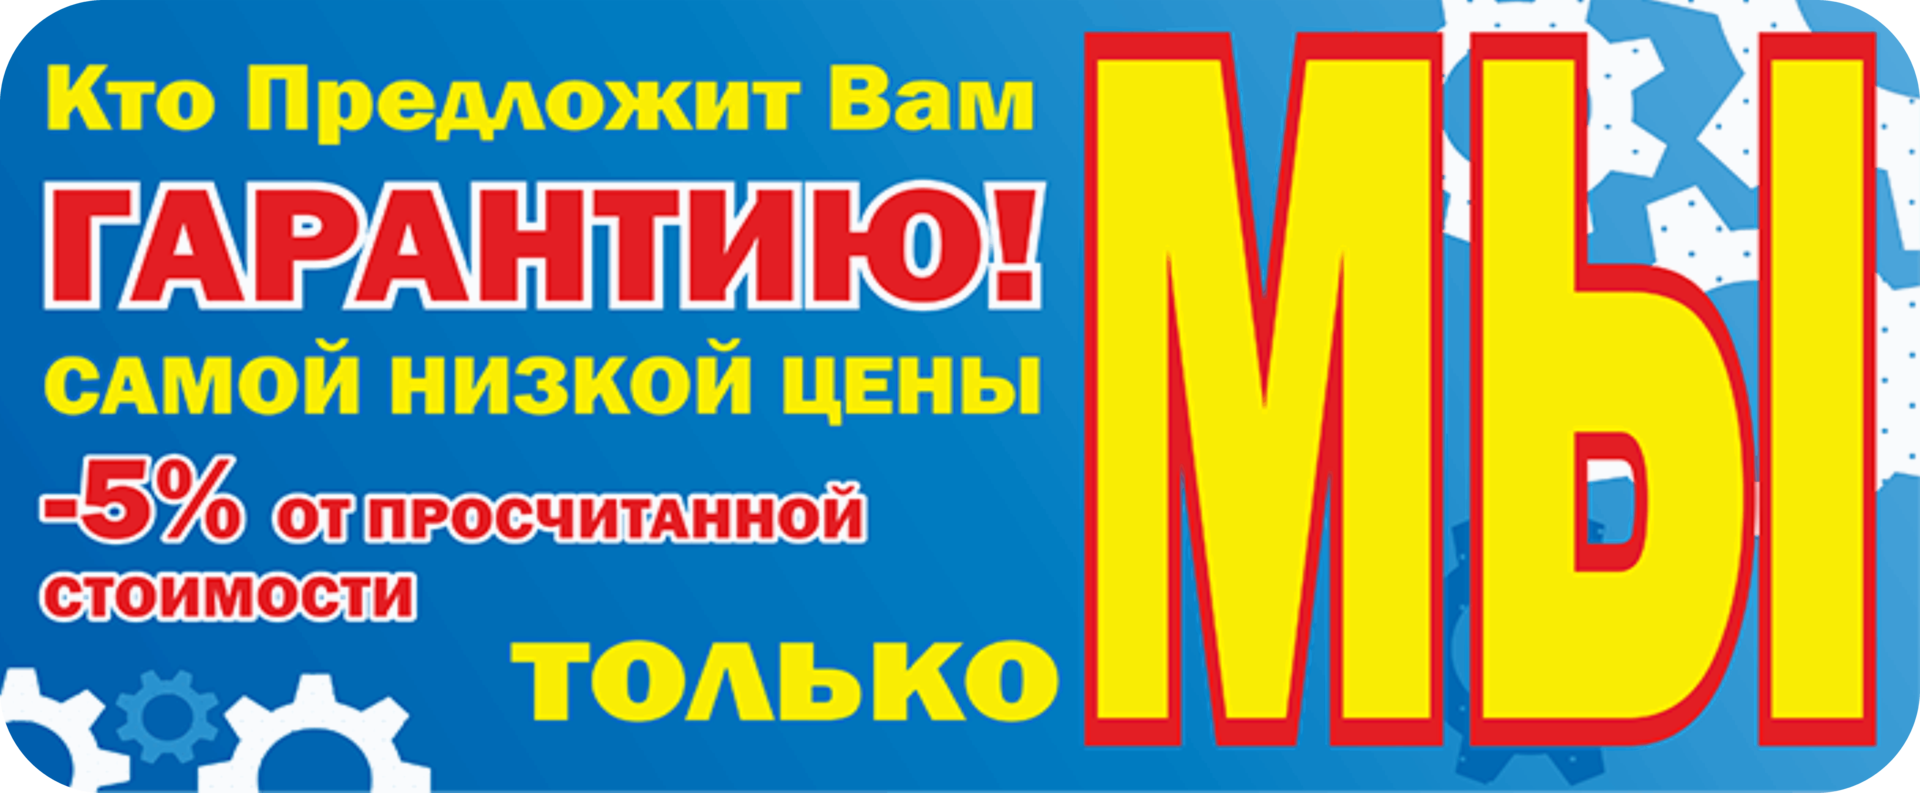 Наружная реклама в Челябинске